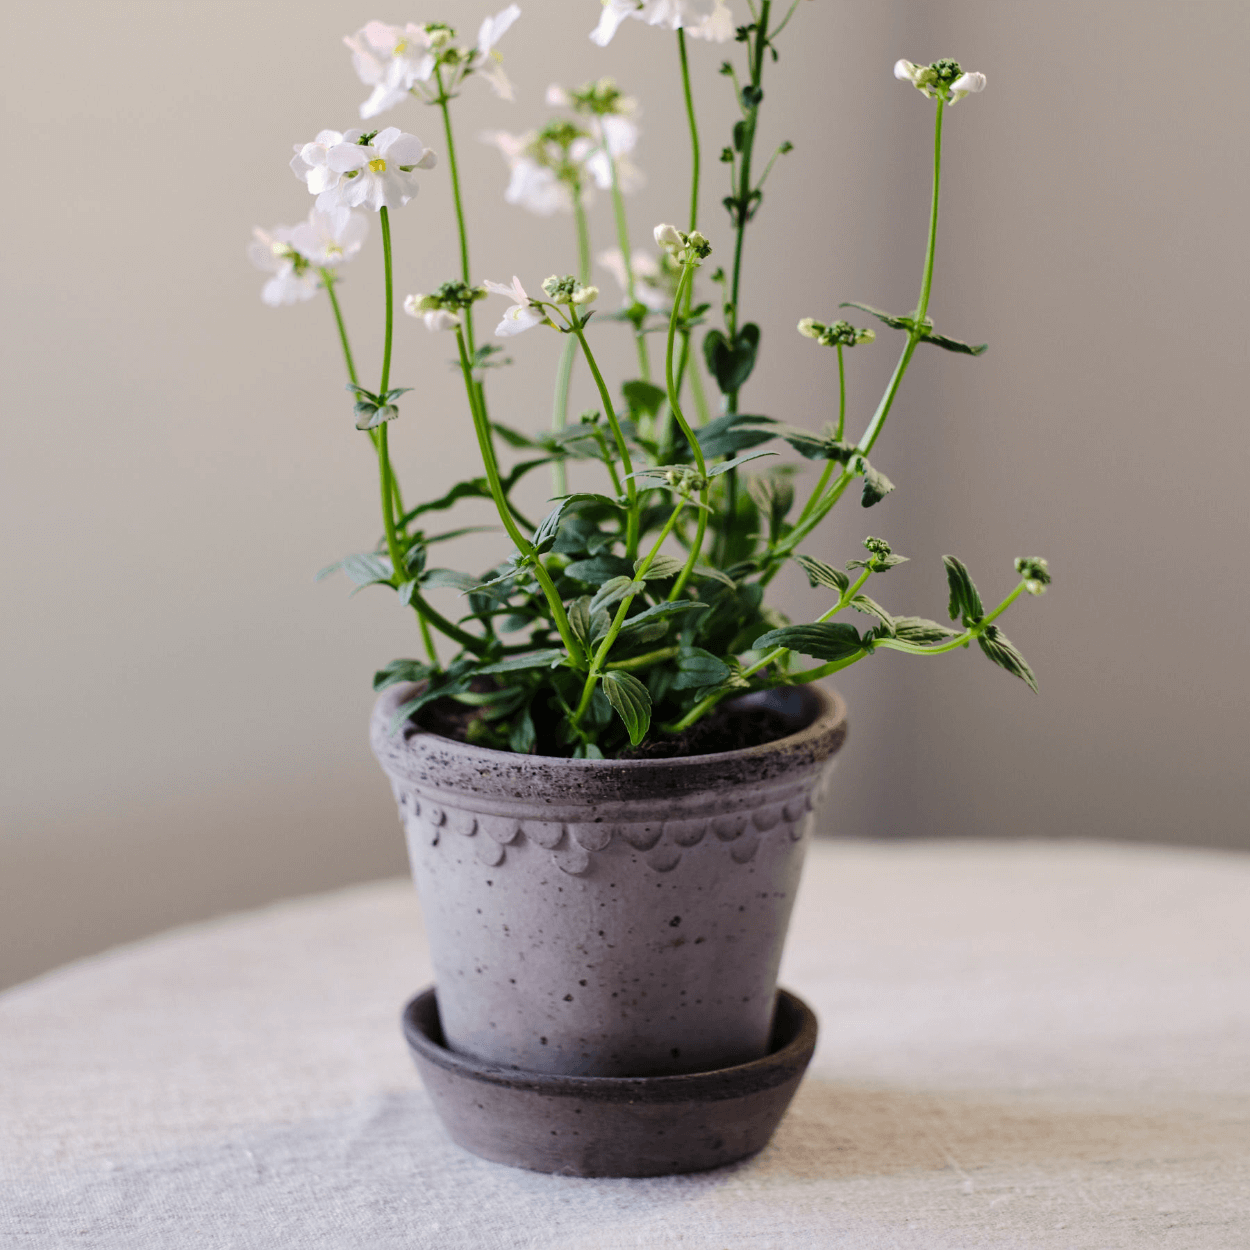 white small flowers in grey copenhagen plant pot on white linen table cloth